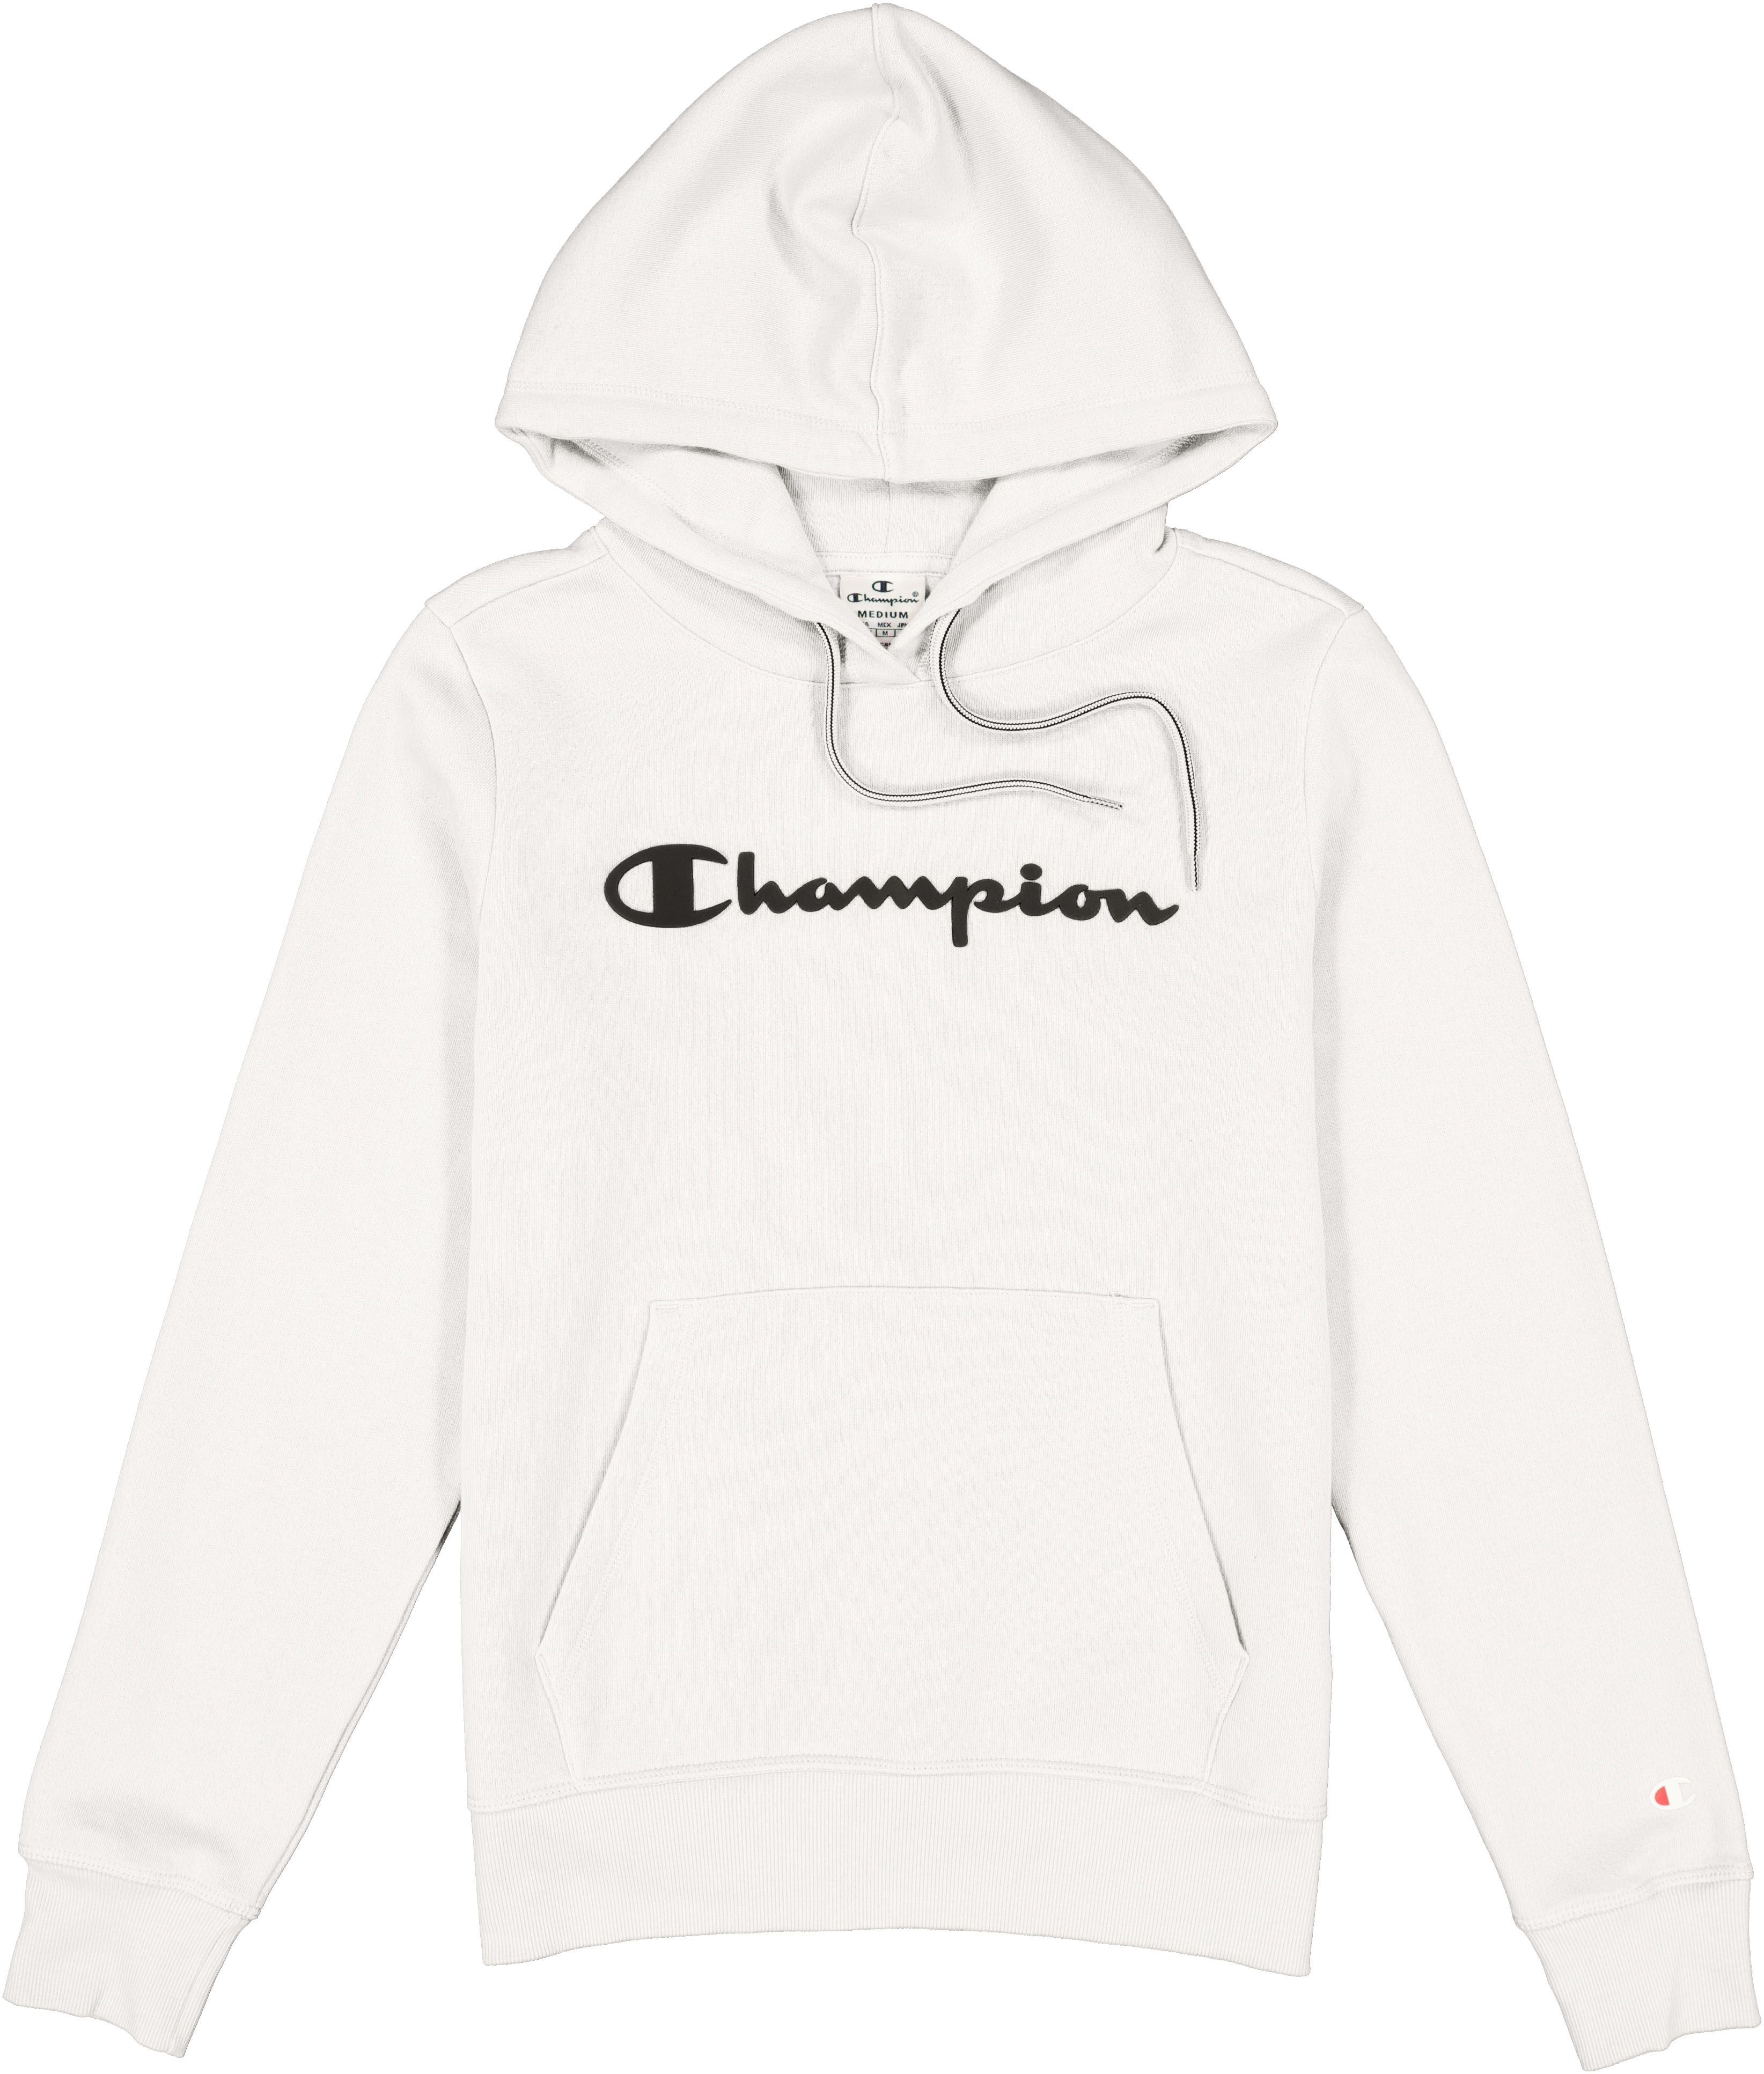 Champion - W's Hooded Sweatshirt